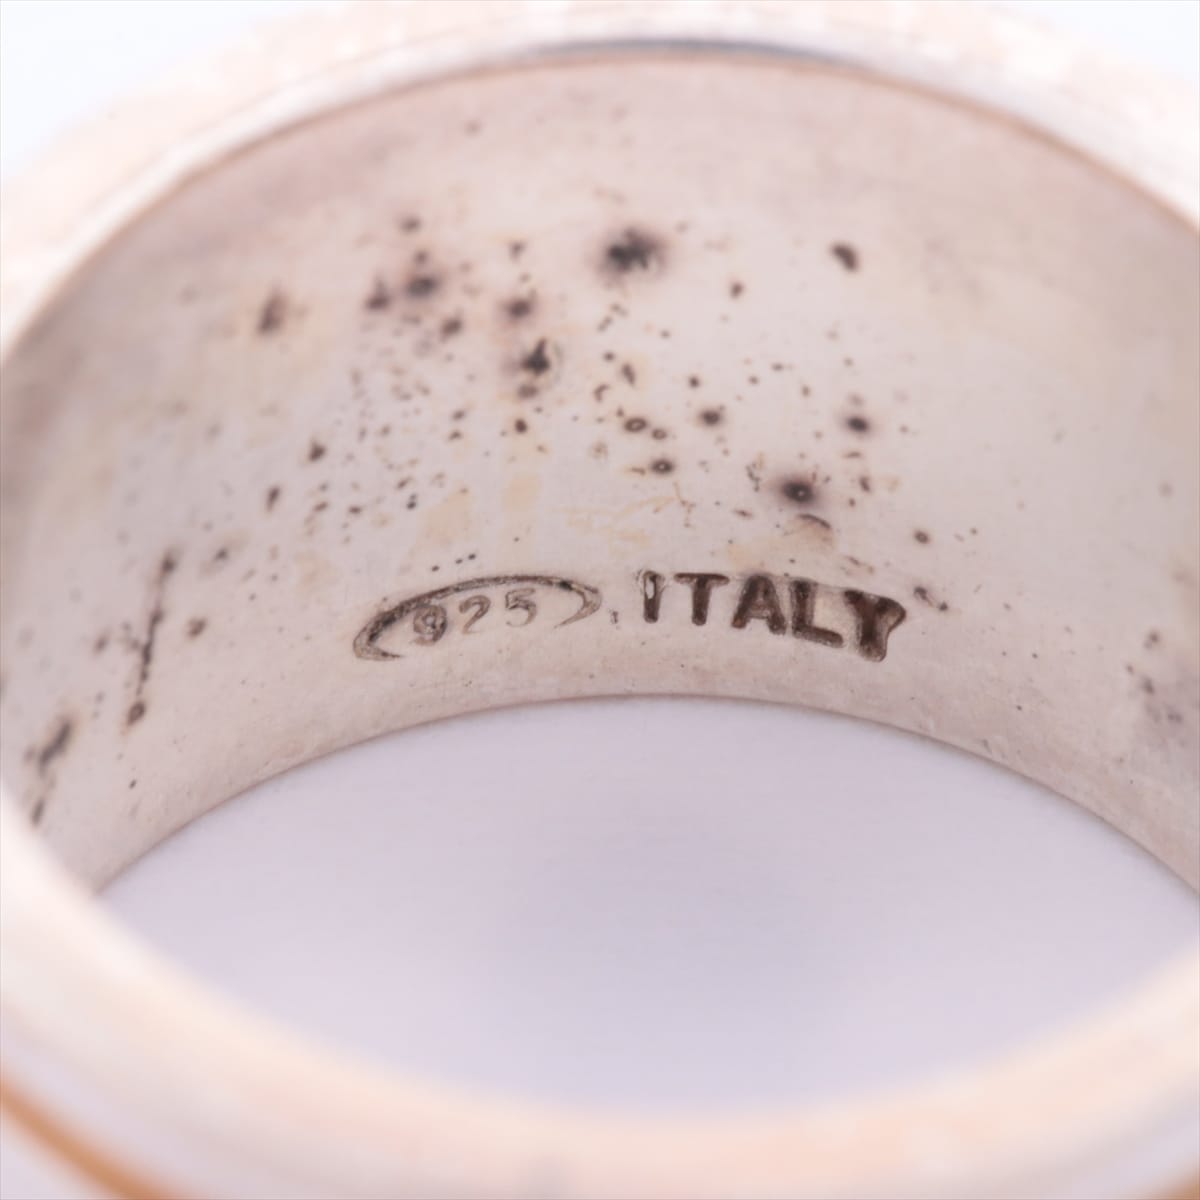 Tiffany Atlas rings 925 10.9g Silver